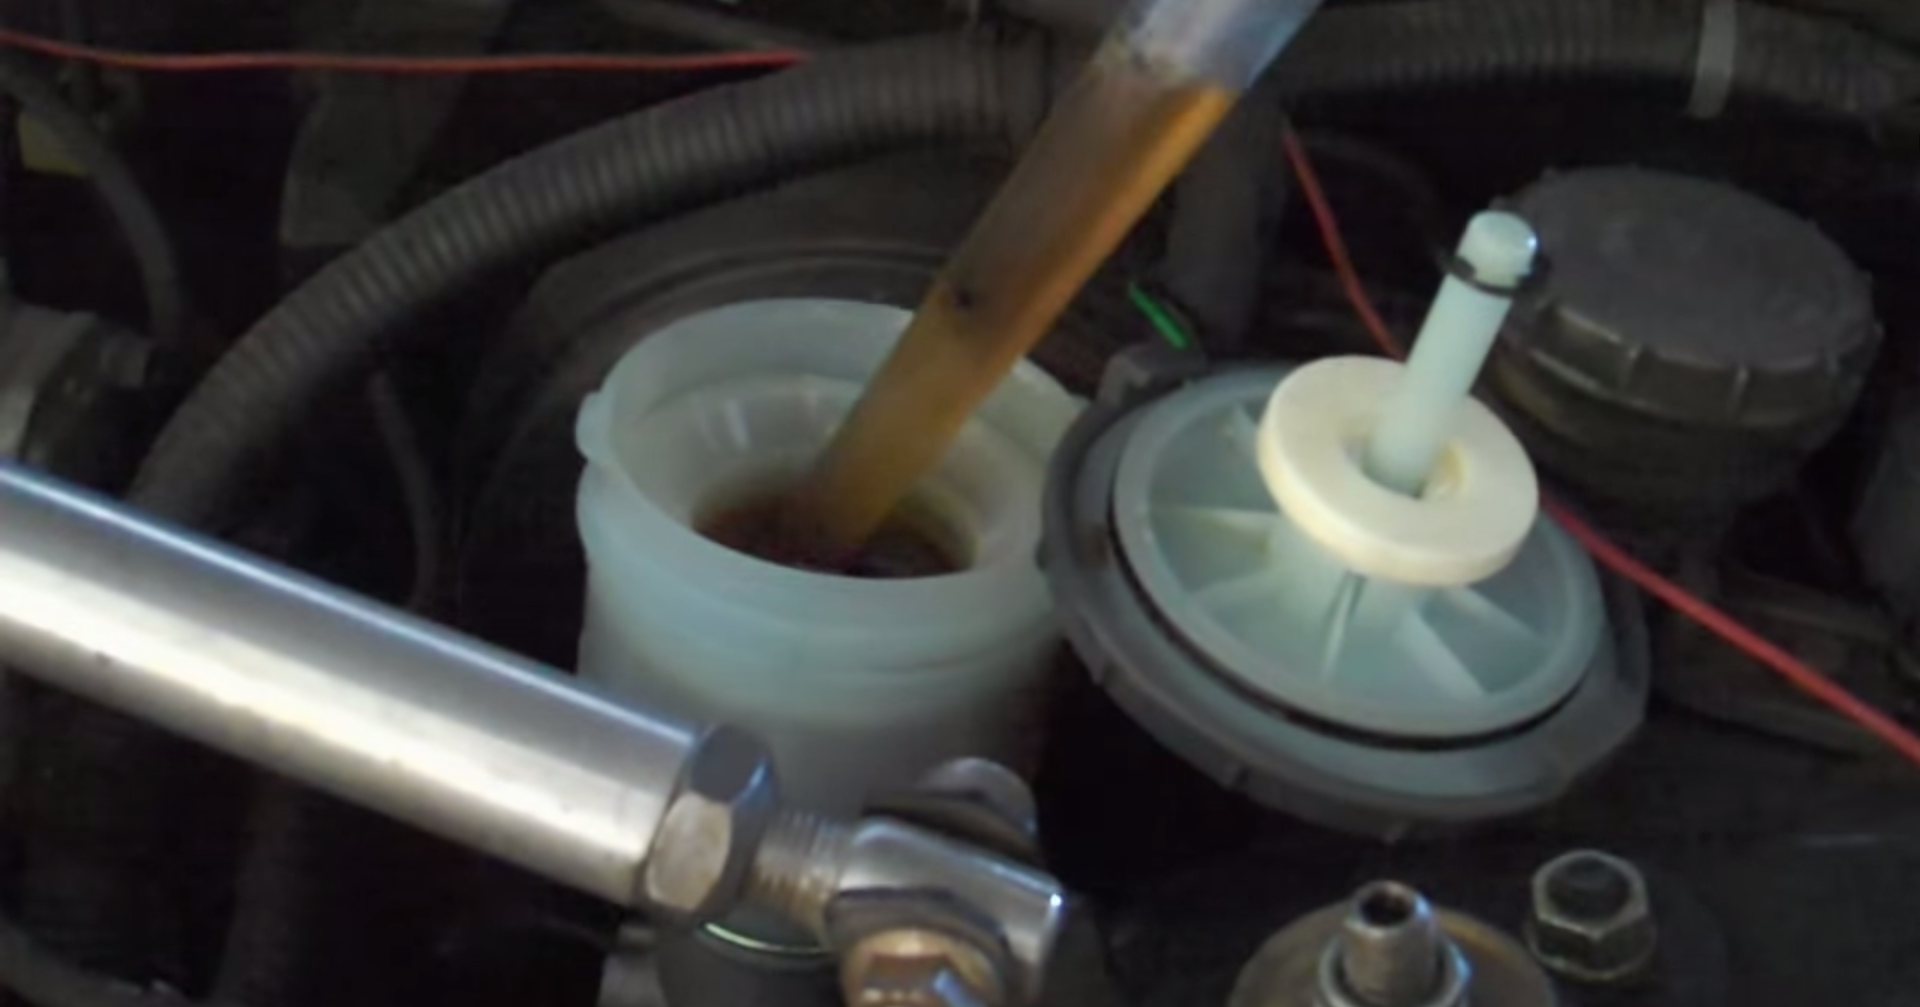 2015 02 20 15 52 58 Tutorial How to change brake fluid in a 1995 Honda Accord YouTube 40338